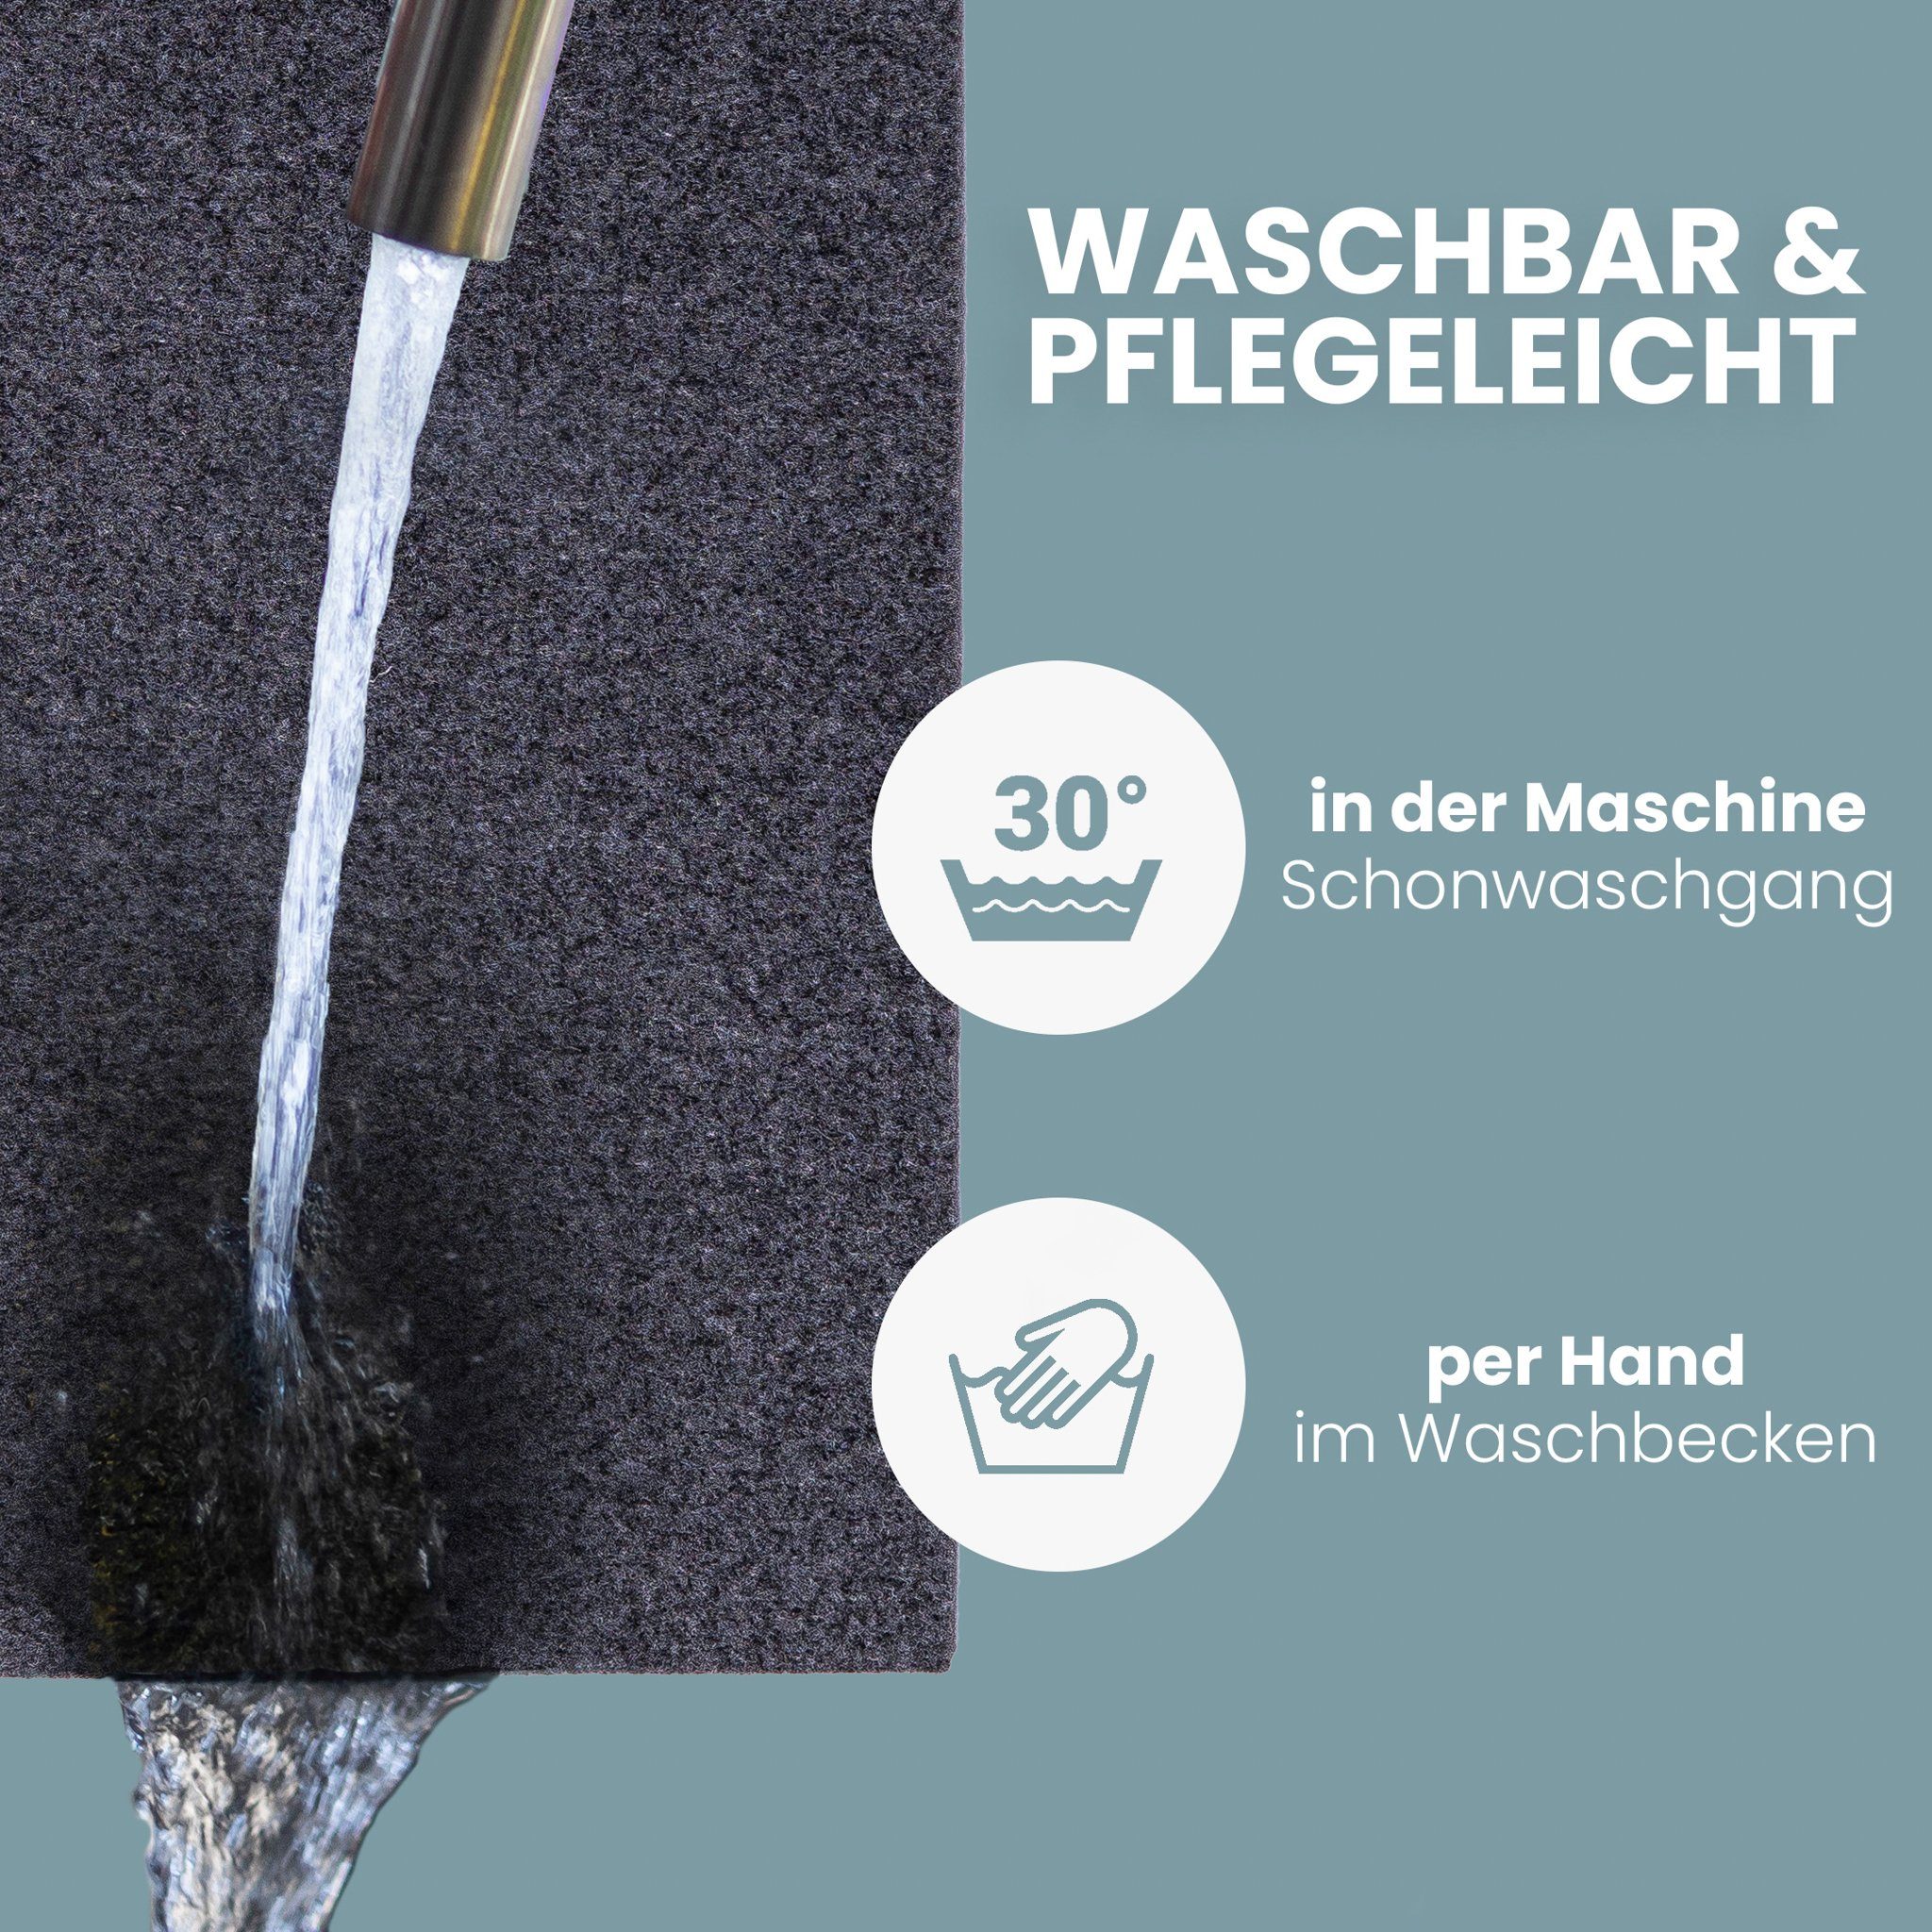 Platzset, Filz (40 x 30cm) - Easy and Platzsets, Tischset Made in Green Filz - Recycling Germany